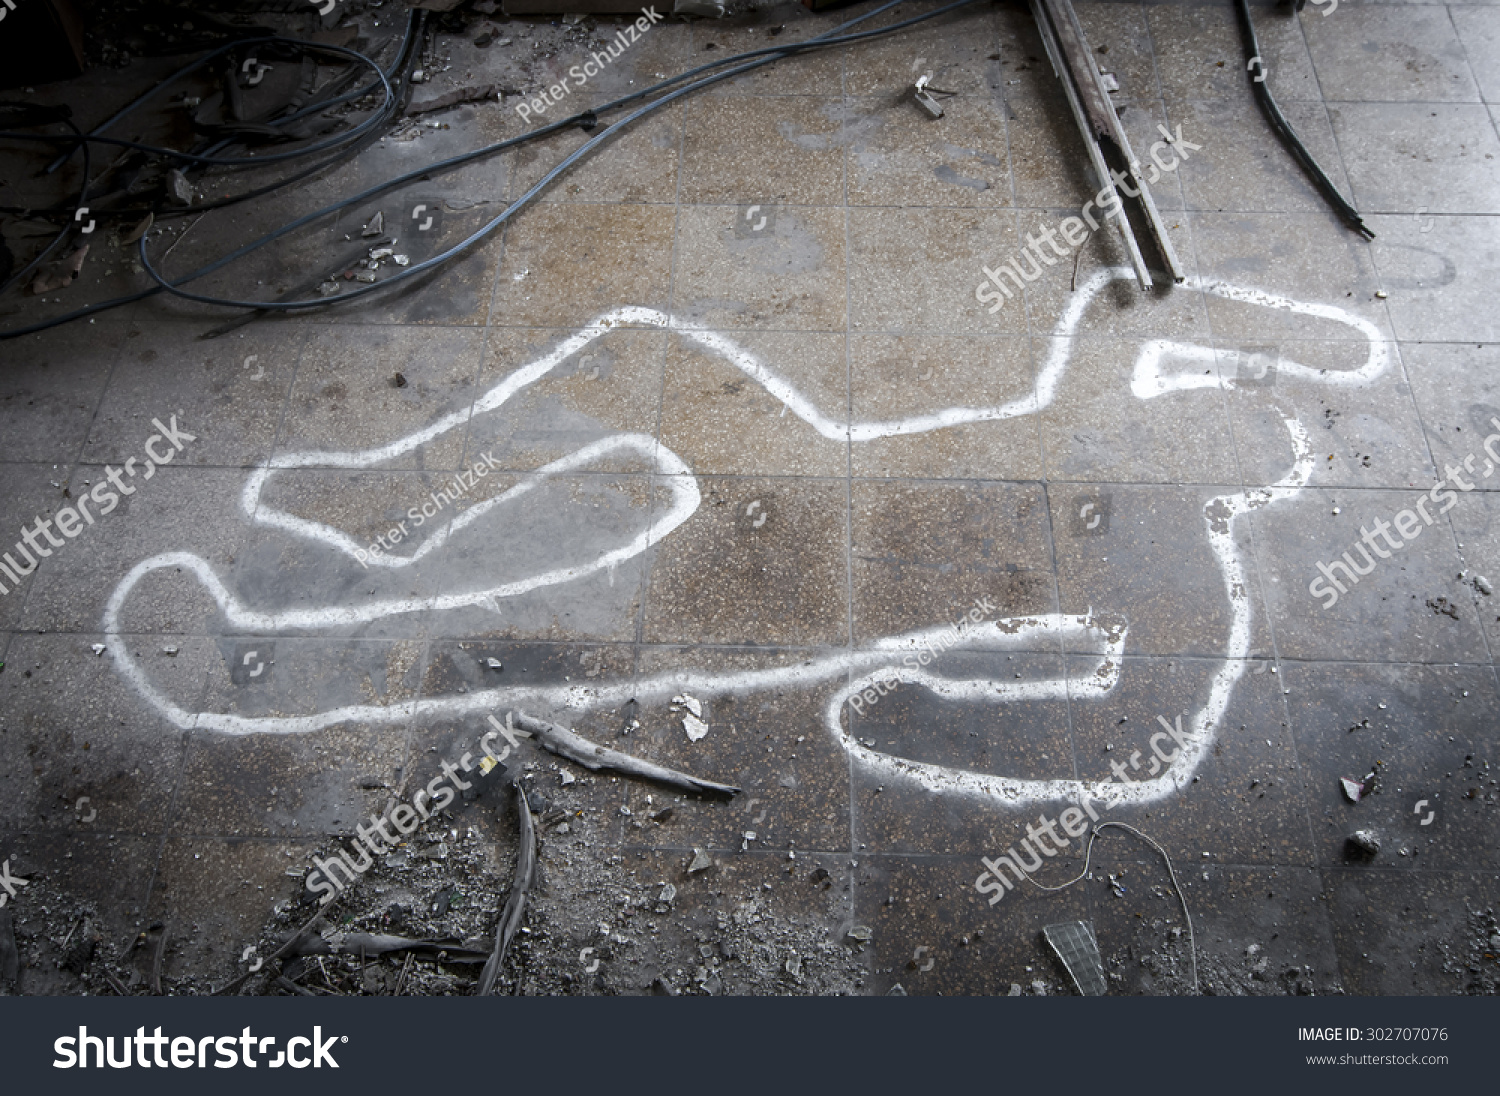 Crime scene chalk outline of a dead body #302707076